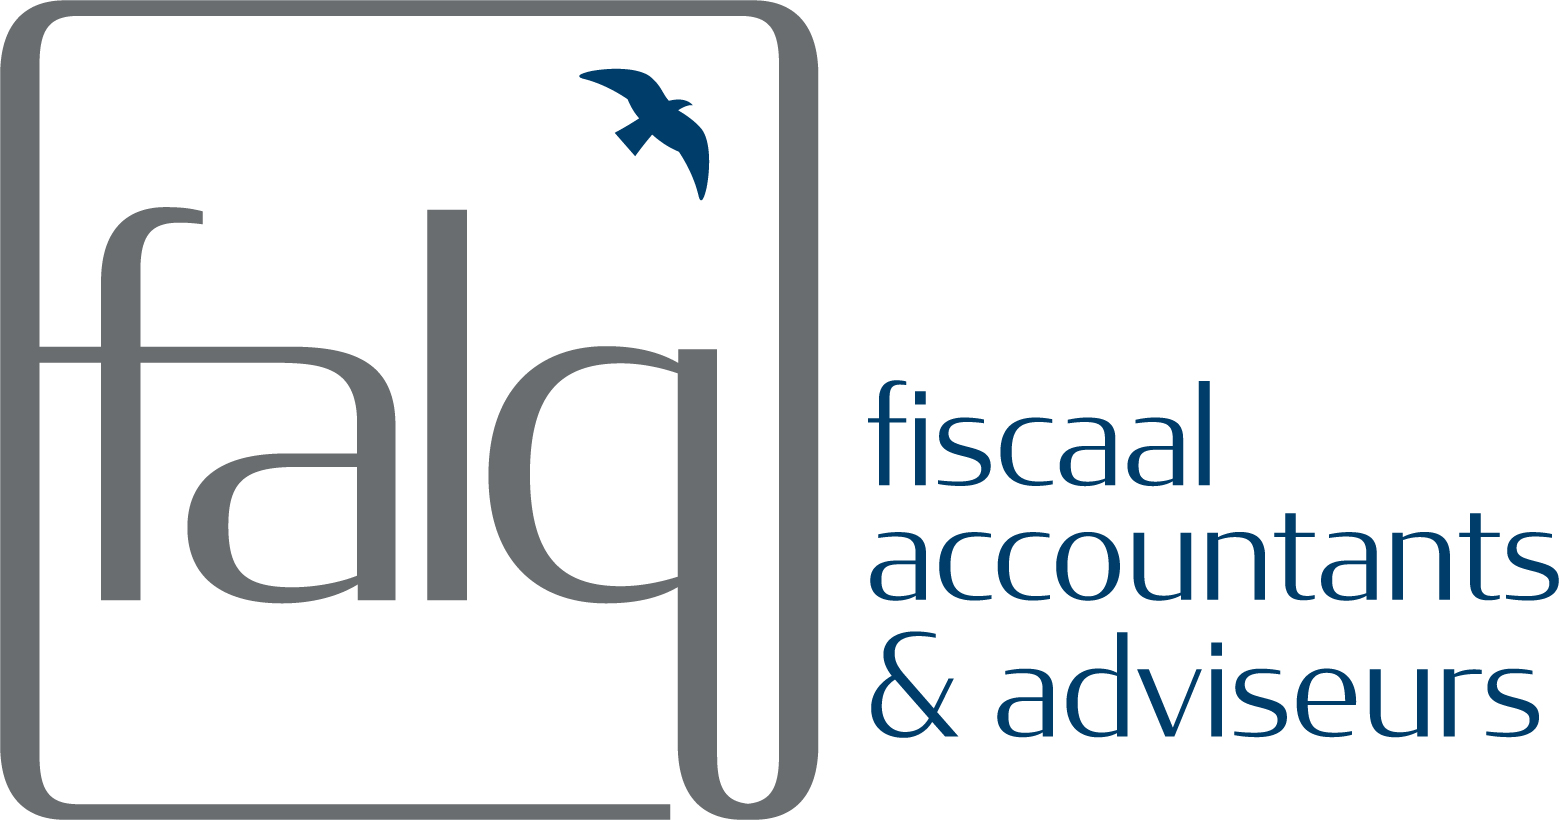 FALQ Fiscaal Accountants & Adviseurs logo